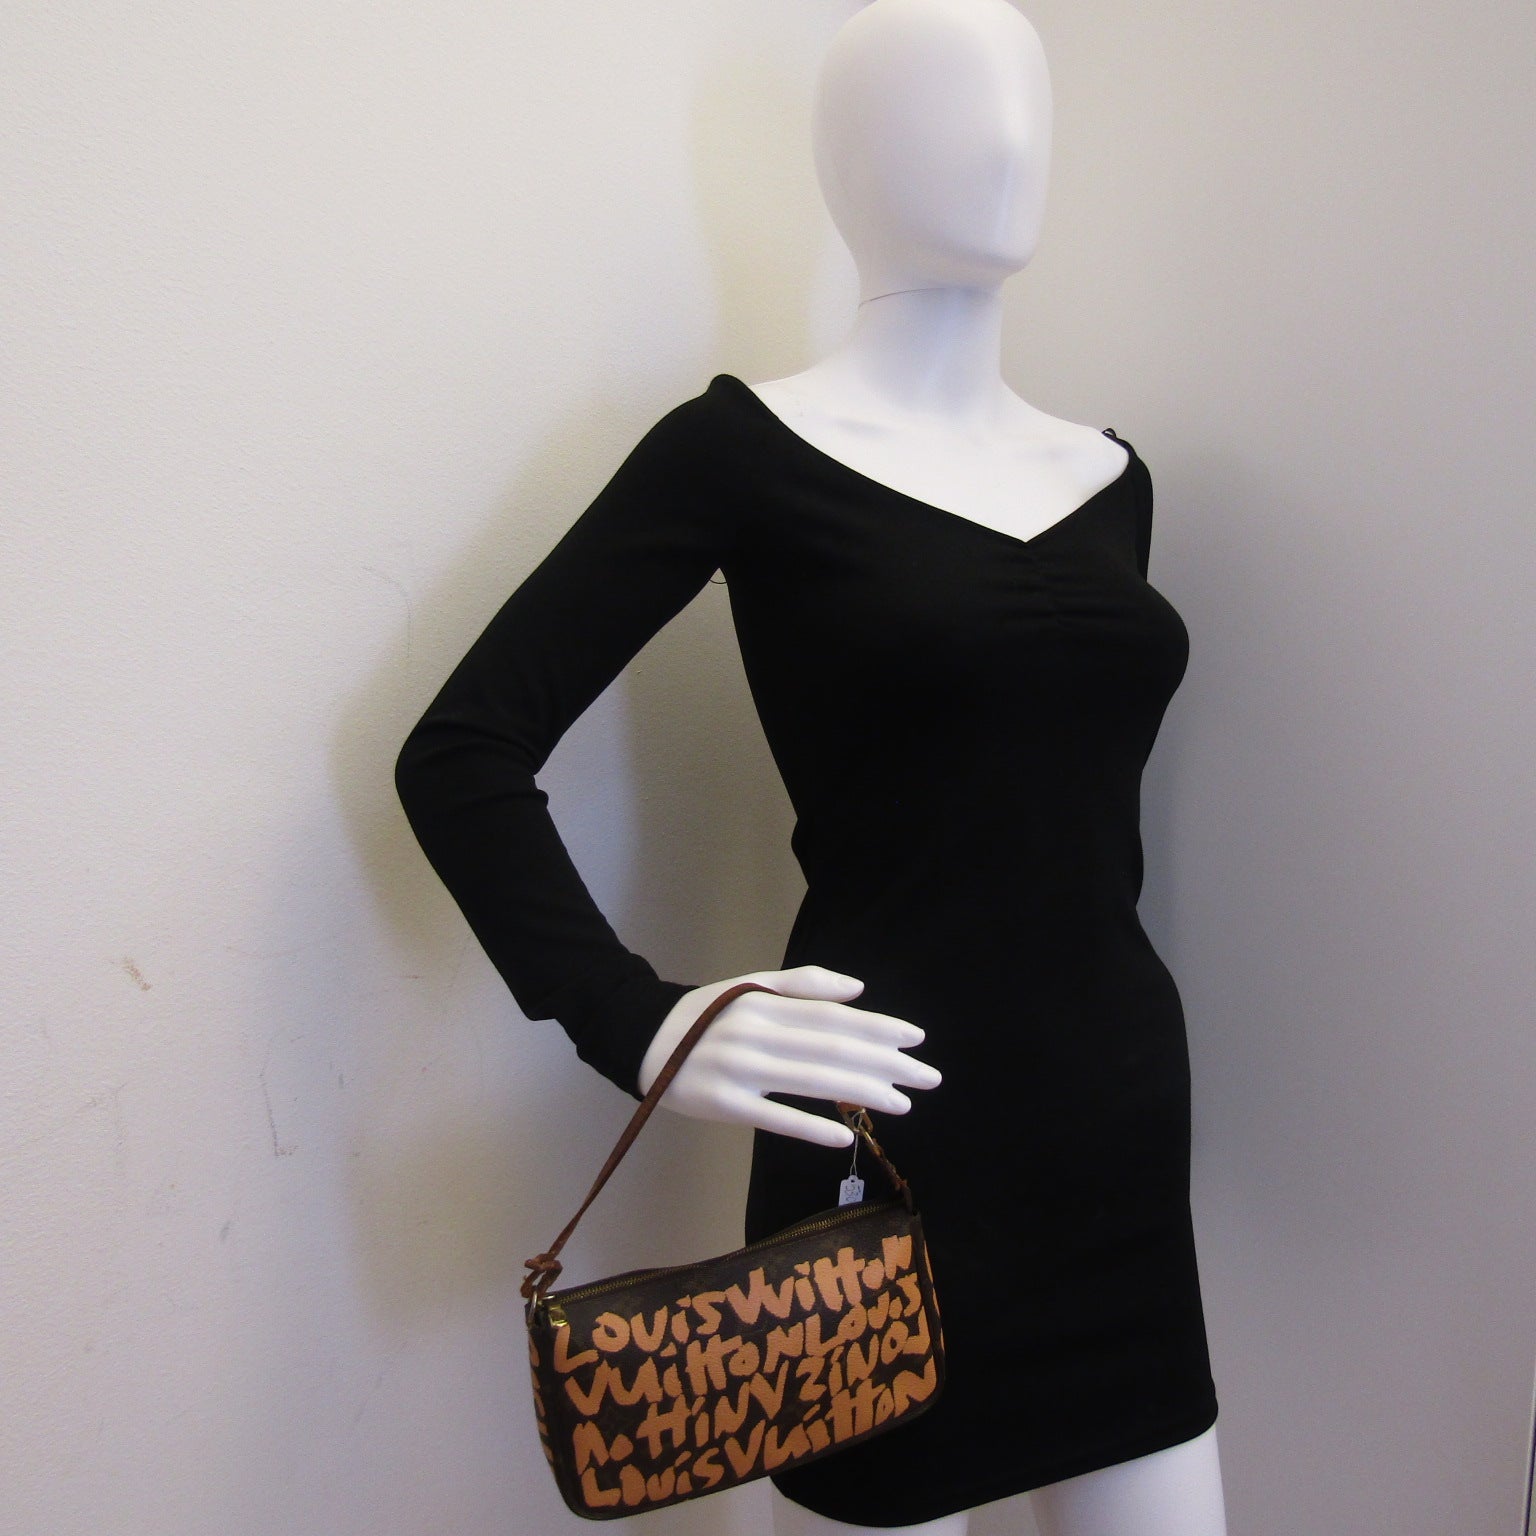 Louis Vuitton x Stephen Sprouse Limited Edition Graffiti Pochette Bag